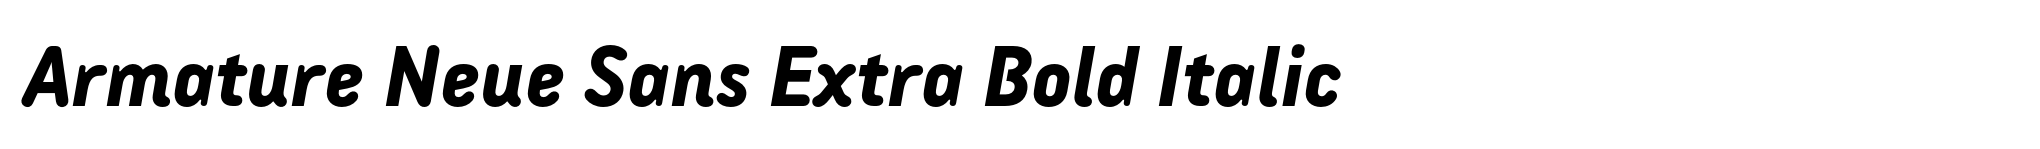 Armature Neue Sans Extra Bold Italic image